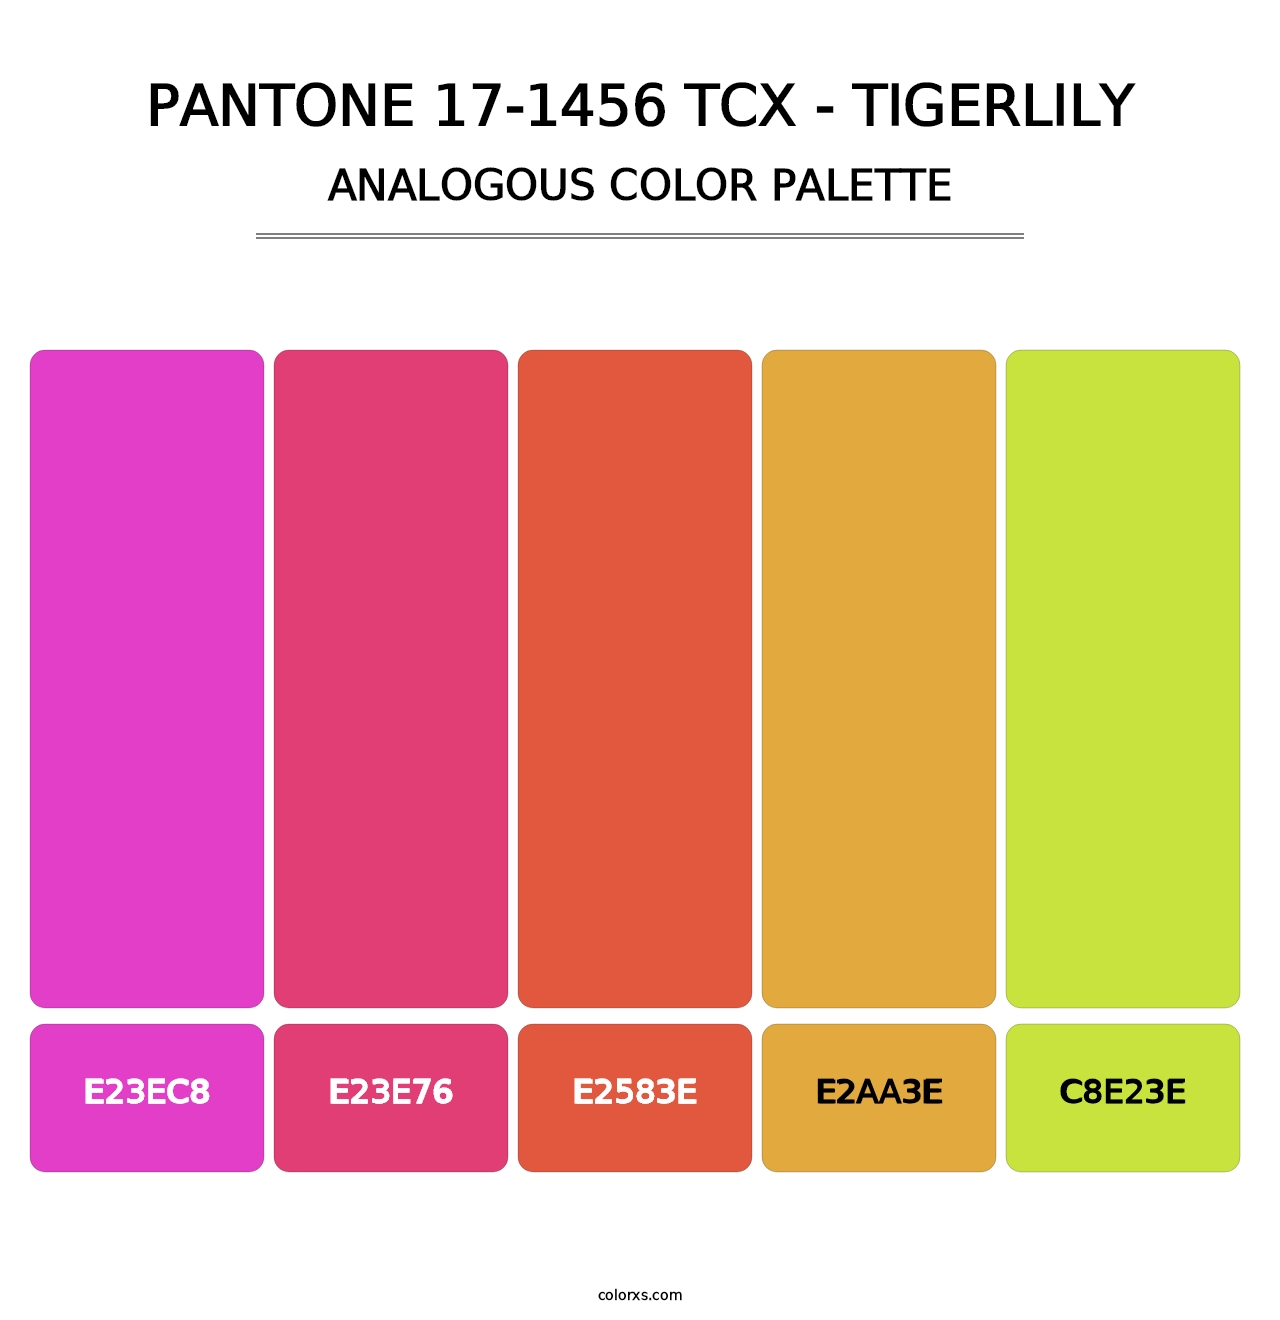 PANTONE 17-1456 TCX - Tigerlily - Analogous Color Palette